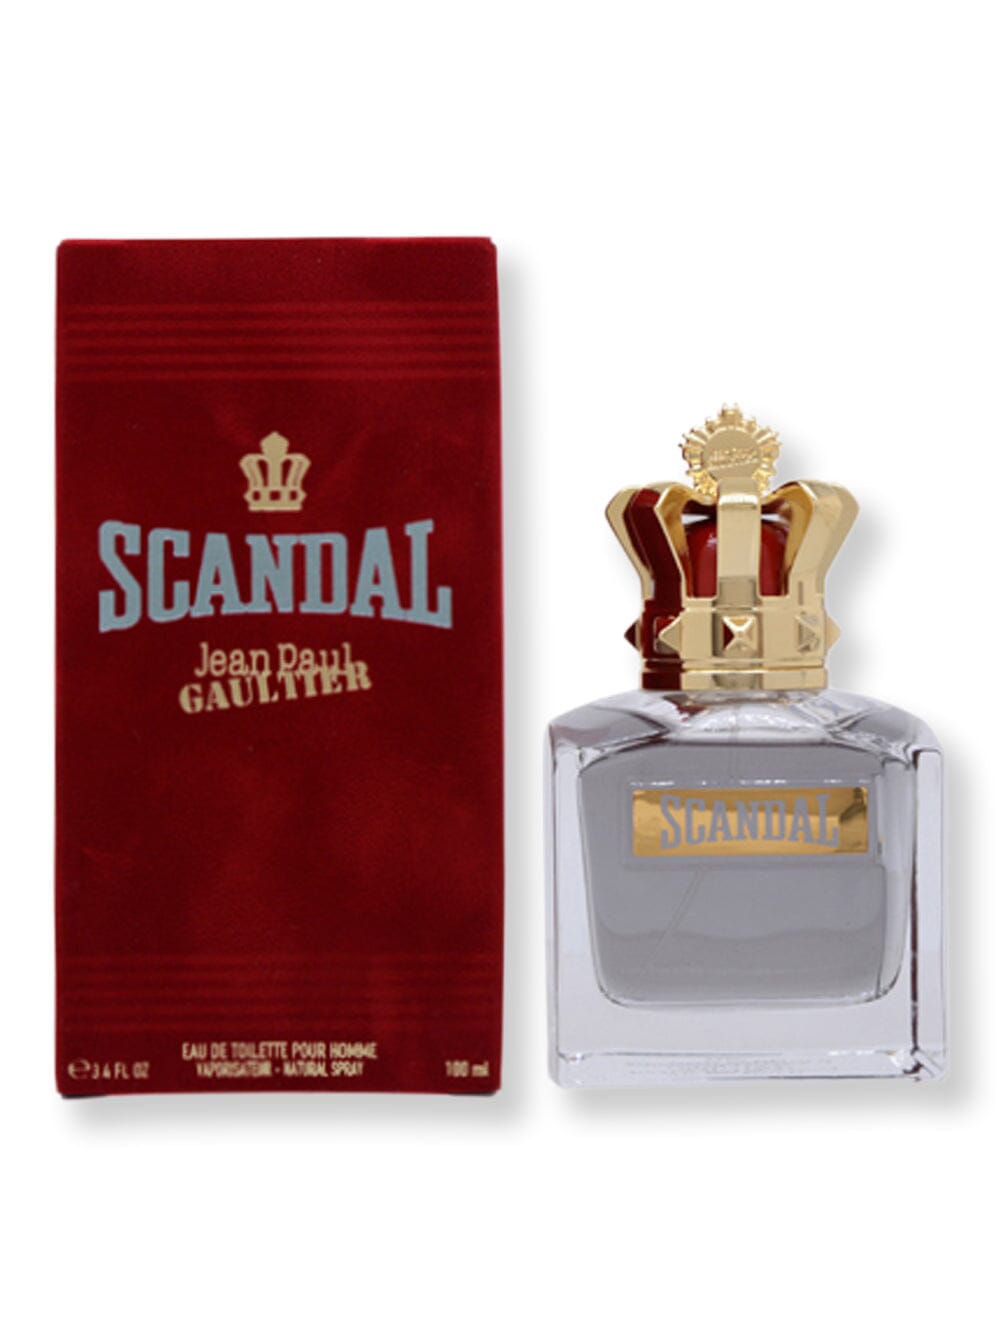 Jean Paul Gaultier Jean Paul Gaultier Scandal EDT Refillable Spray 3.4 oz100 ml Perfume 